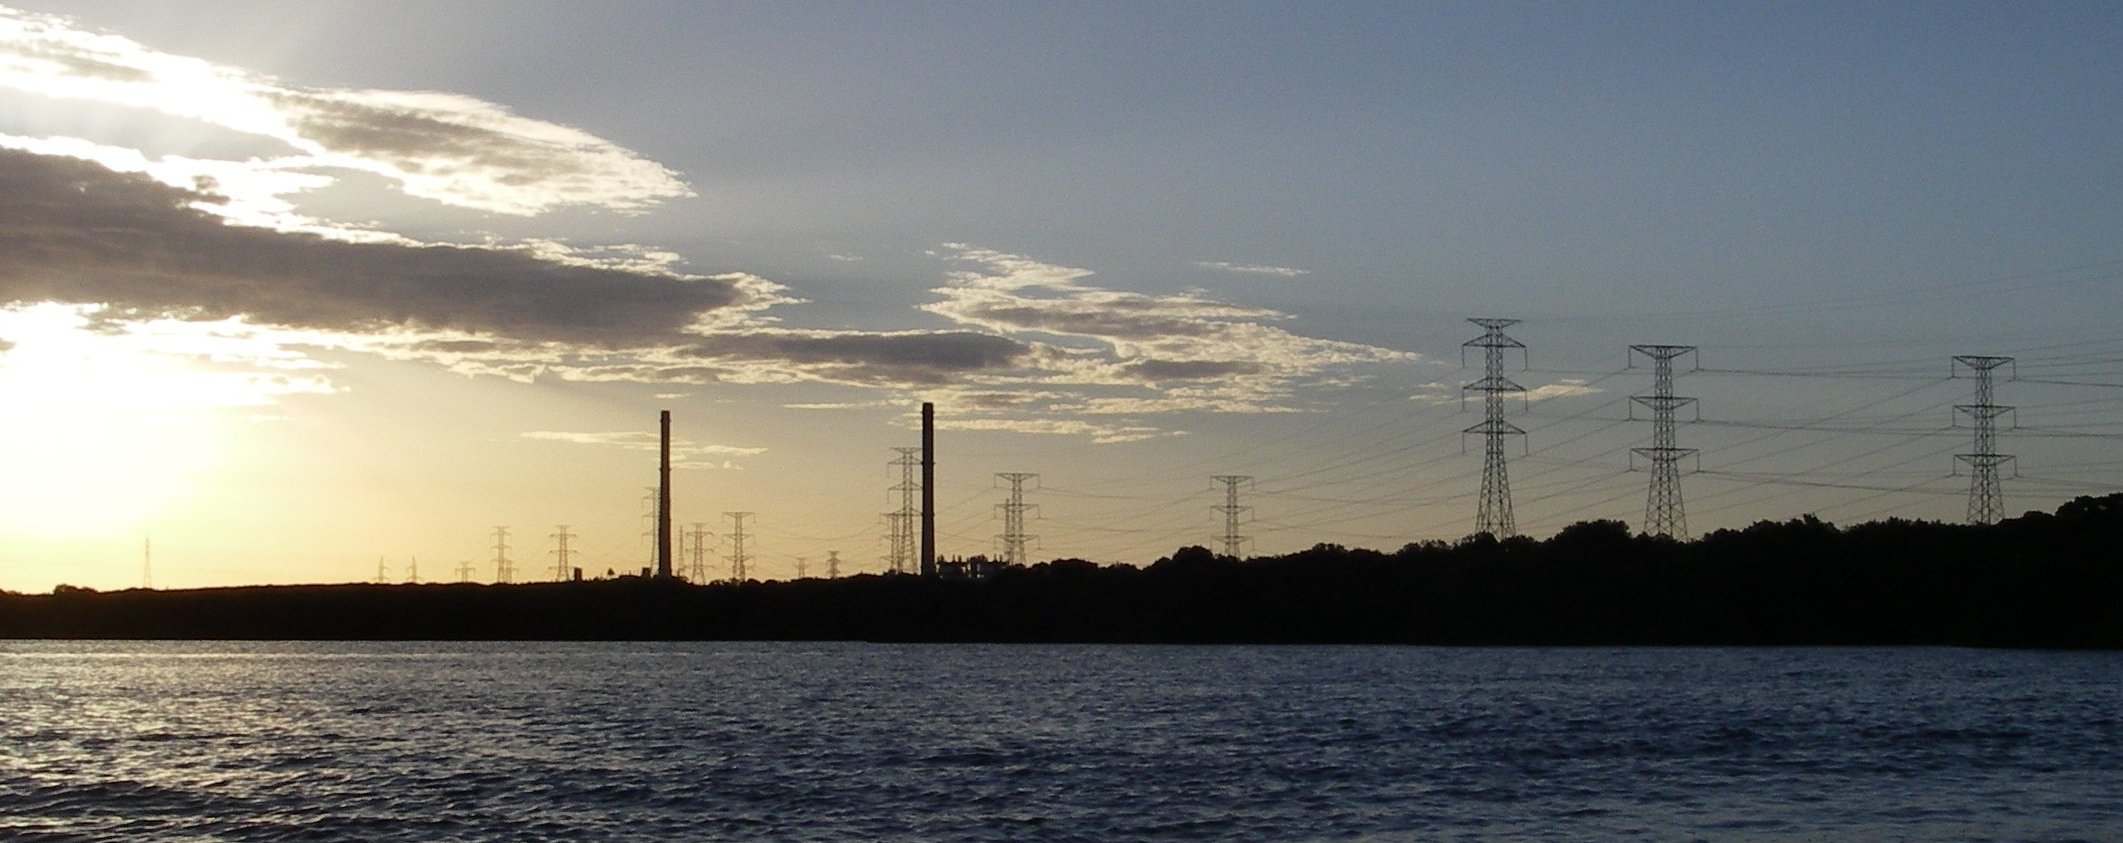 https://en.wikipedia.org/wiki/Torrens_Island_Power_Station